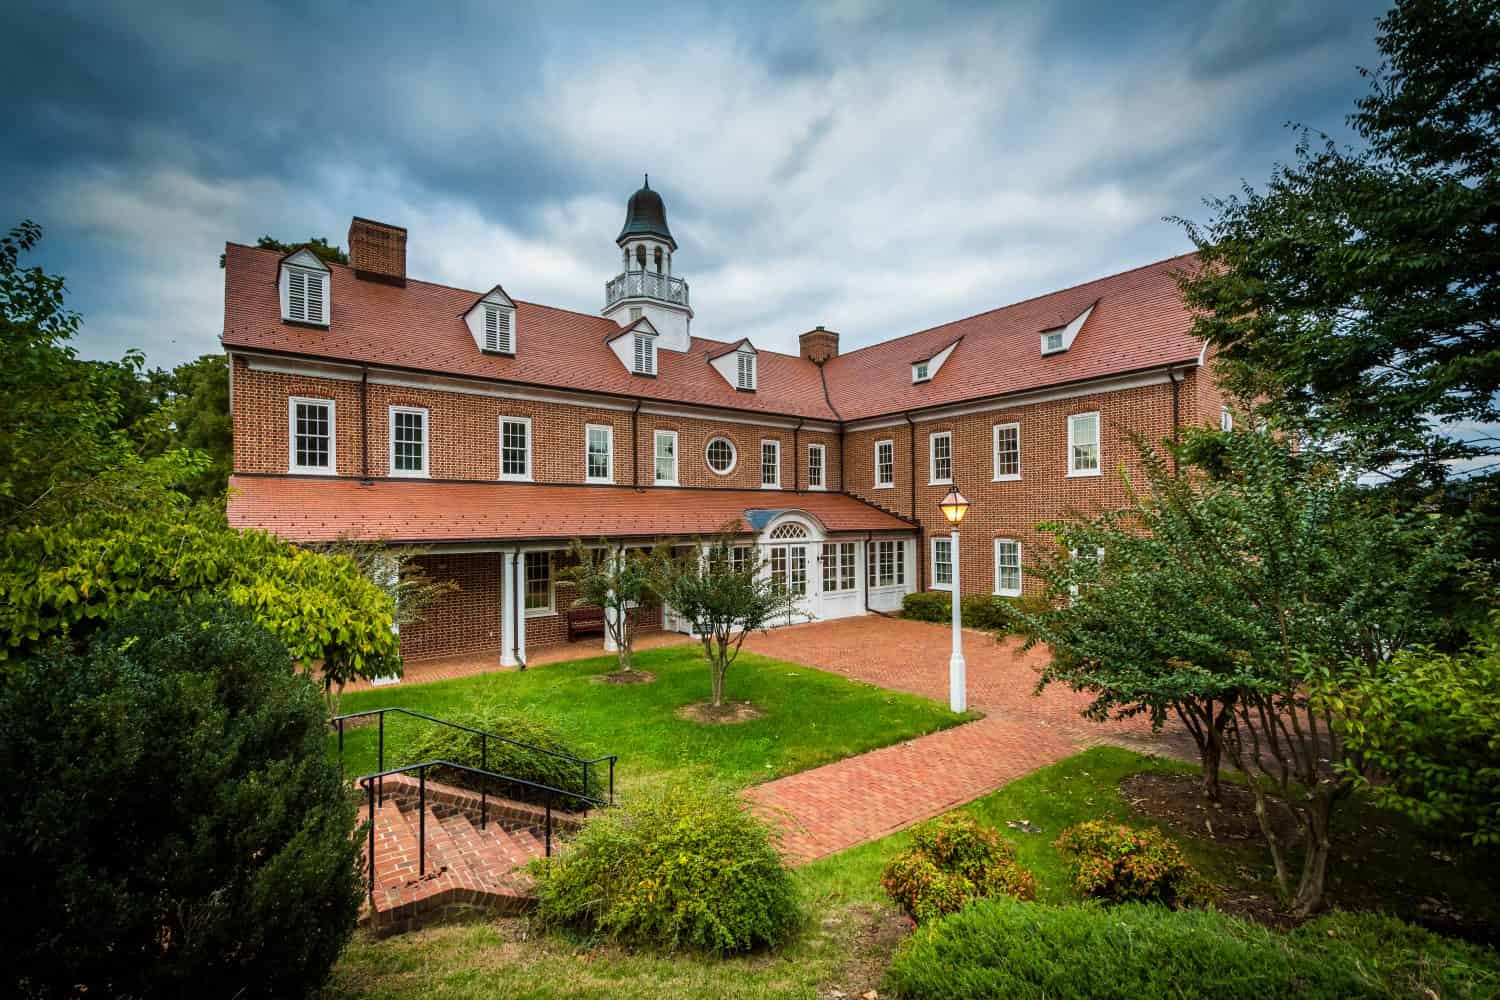 Building at Salem College, in Winston-Salem, North Carolina.